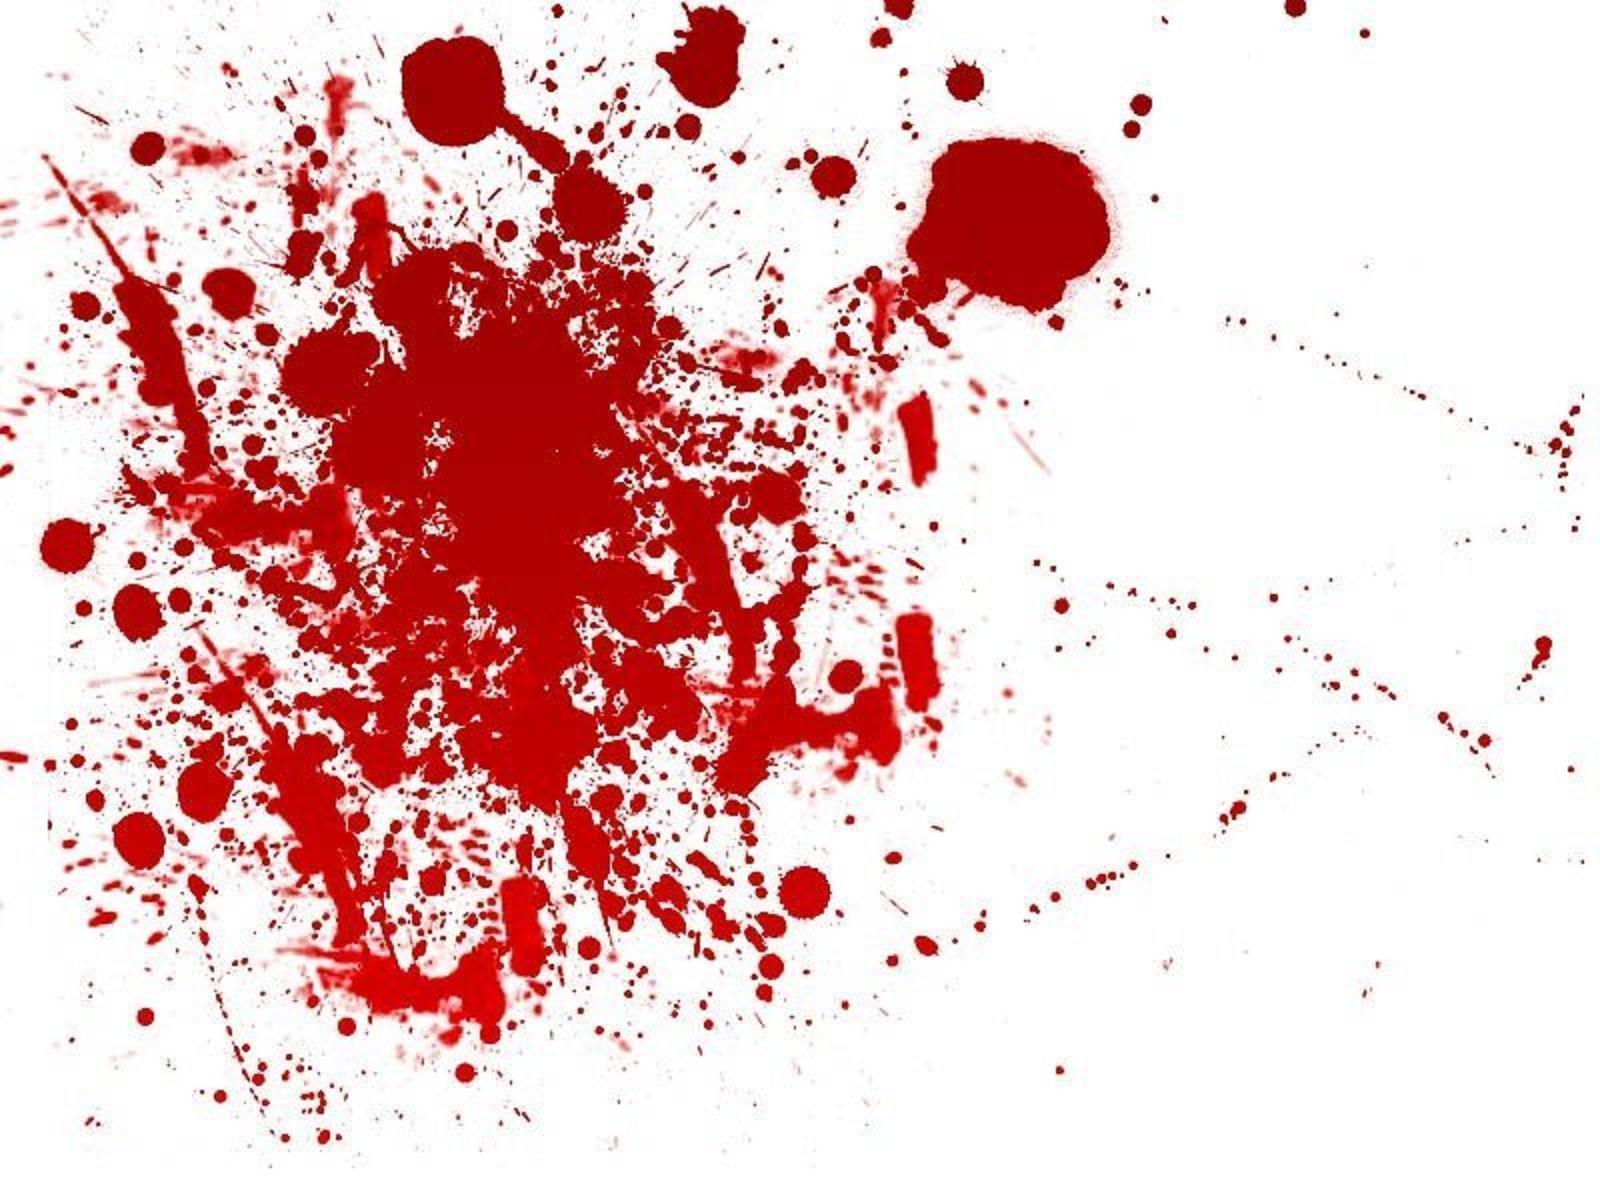 Blood   Human Blood Wallpaper  22467979    Fanpop